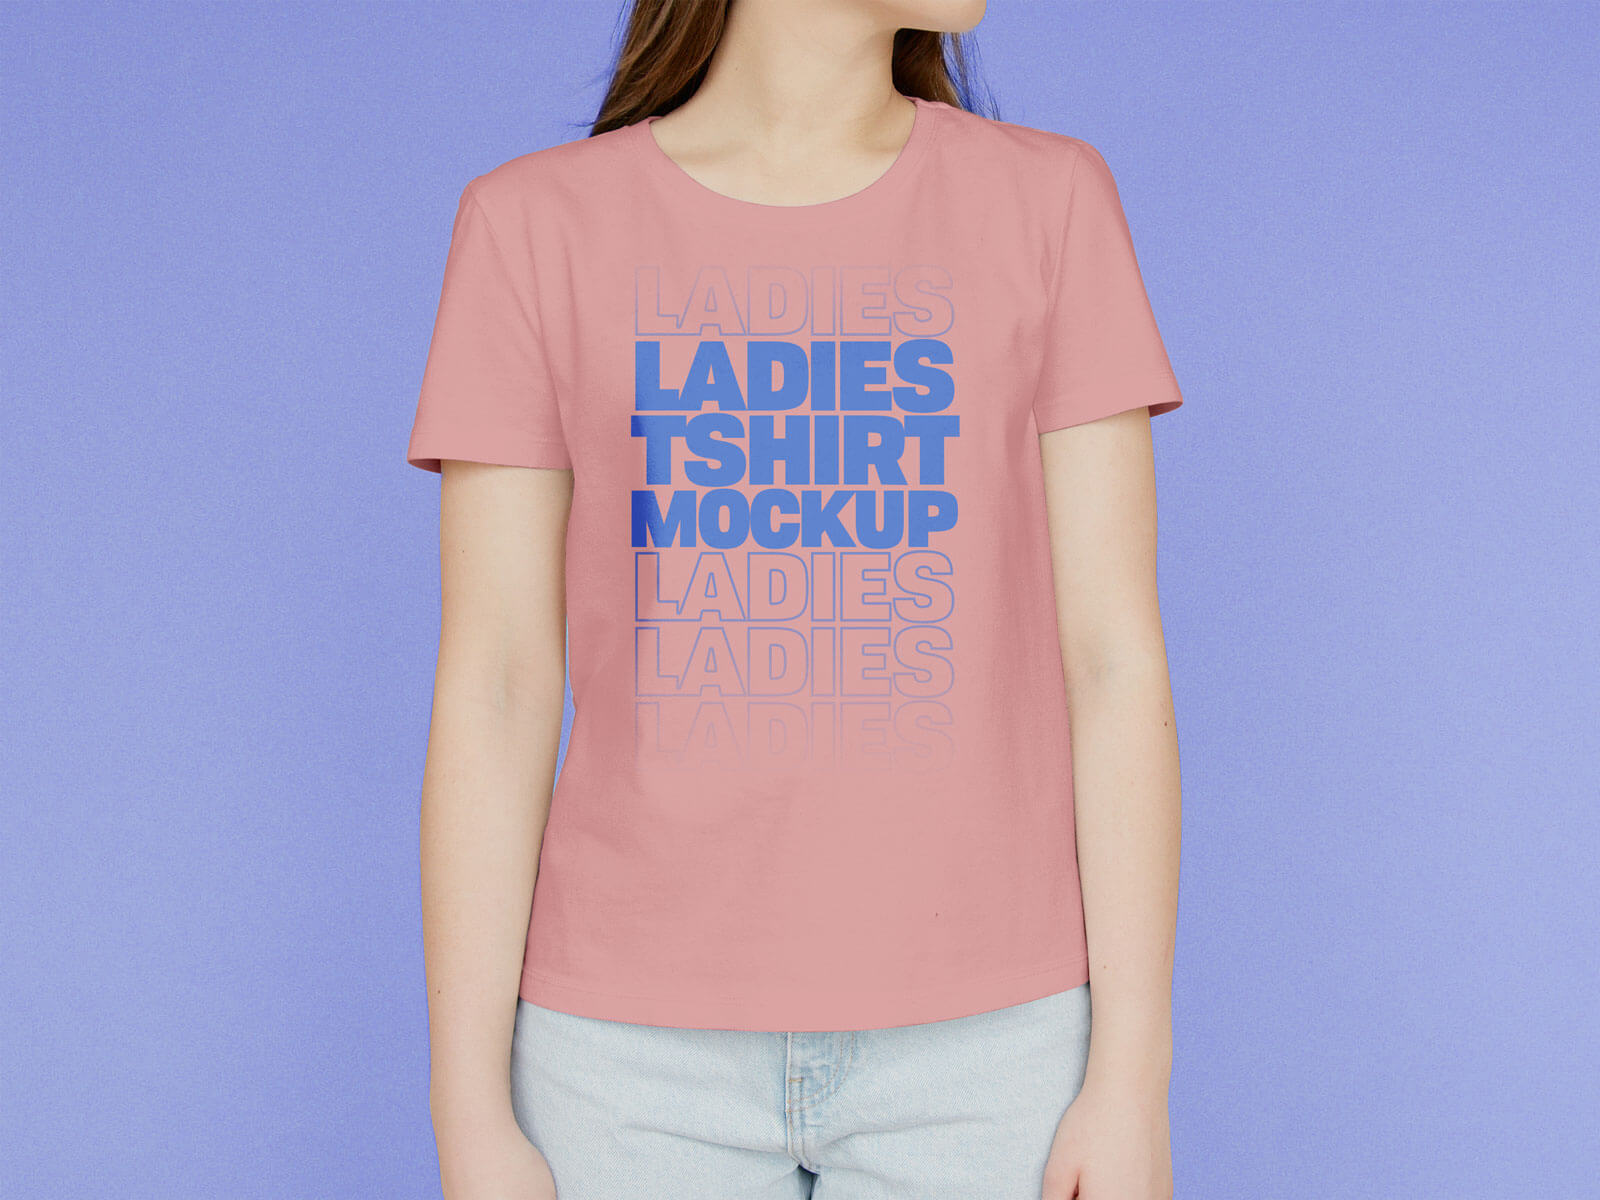 Free-Ladies-T-Shirt-Mockup-PSD